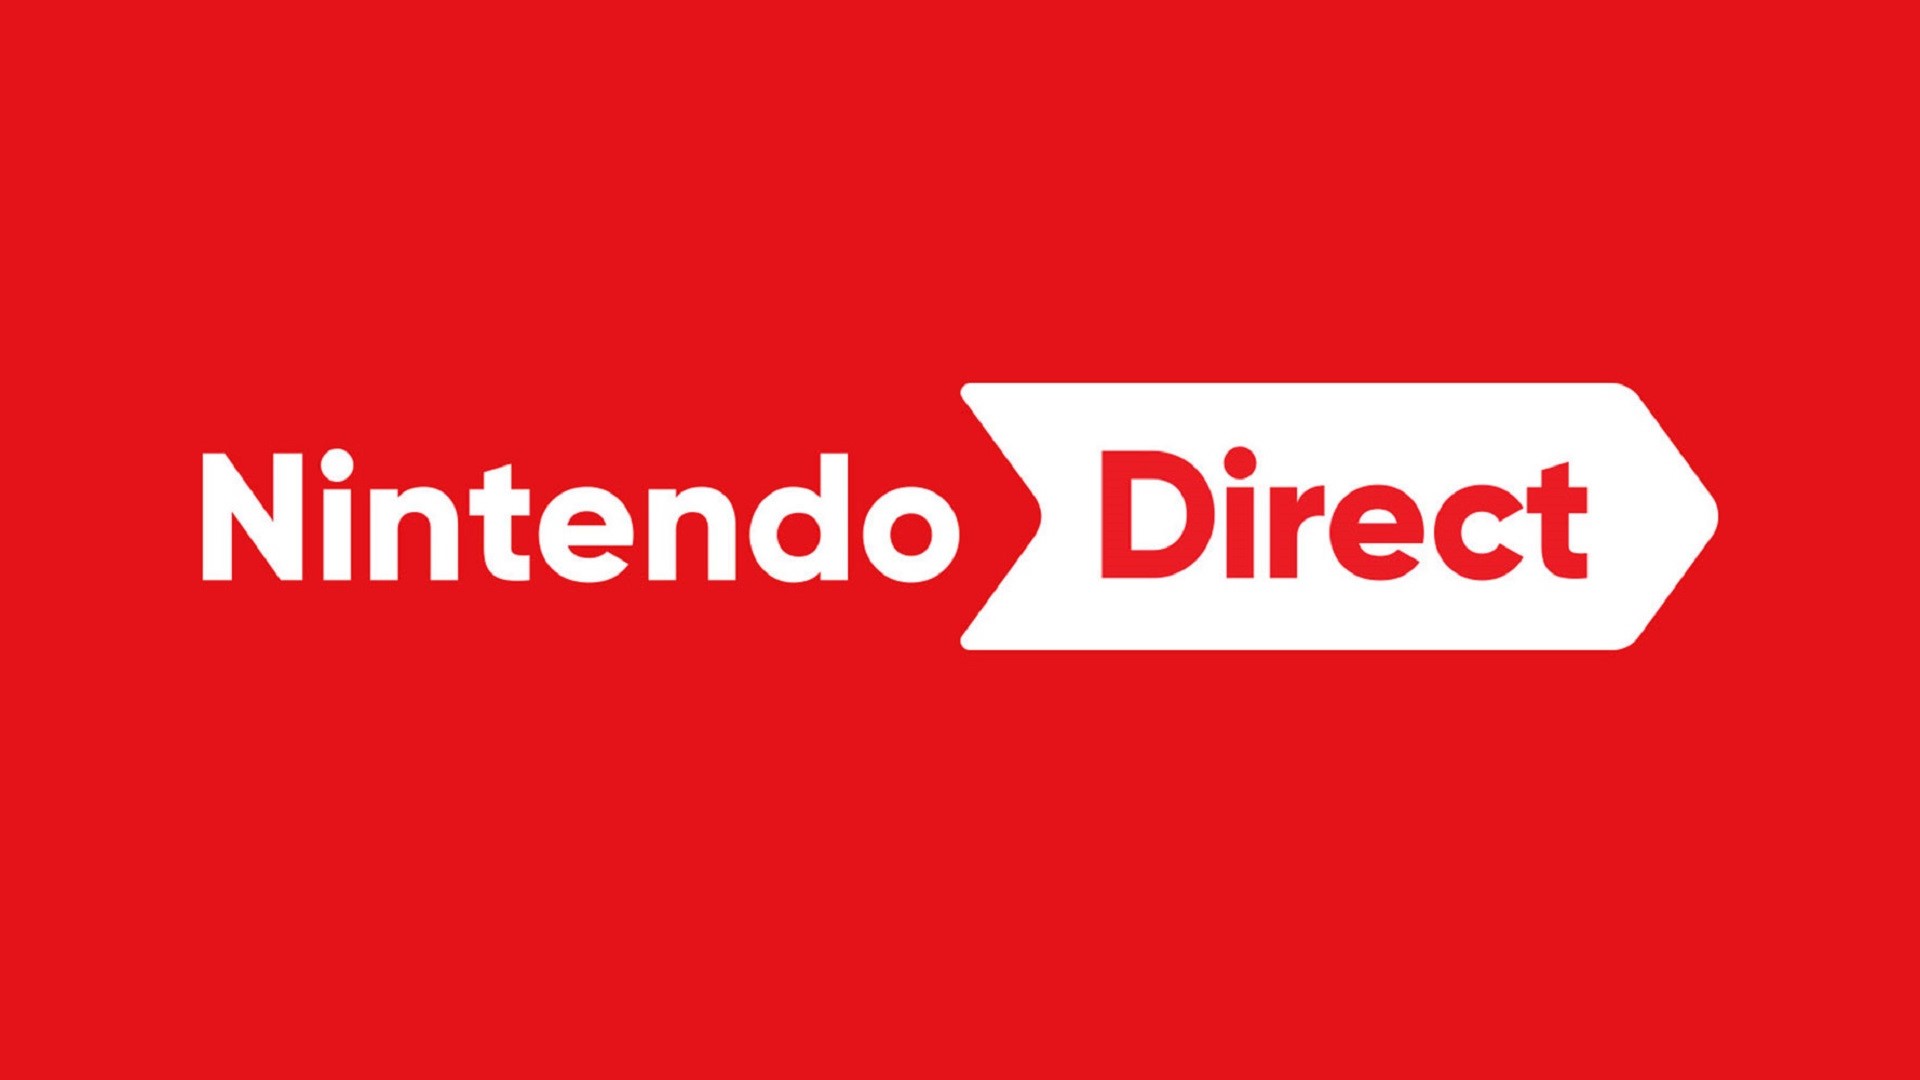 Nintendo Direct Announced for June 21st